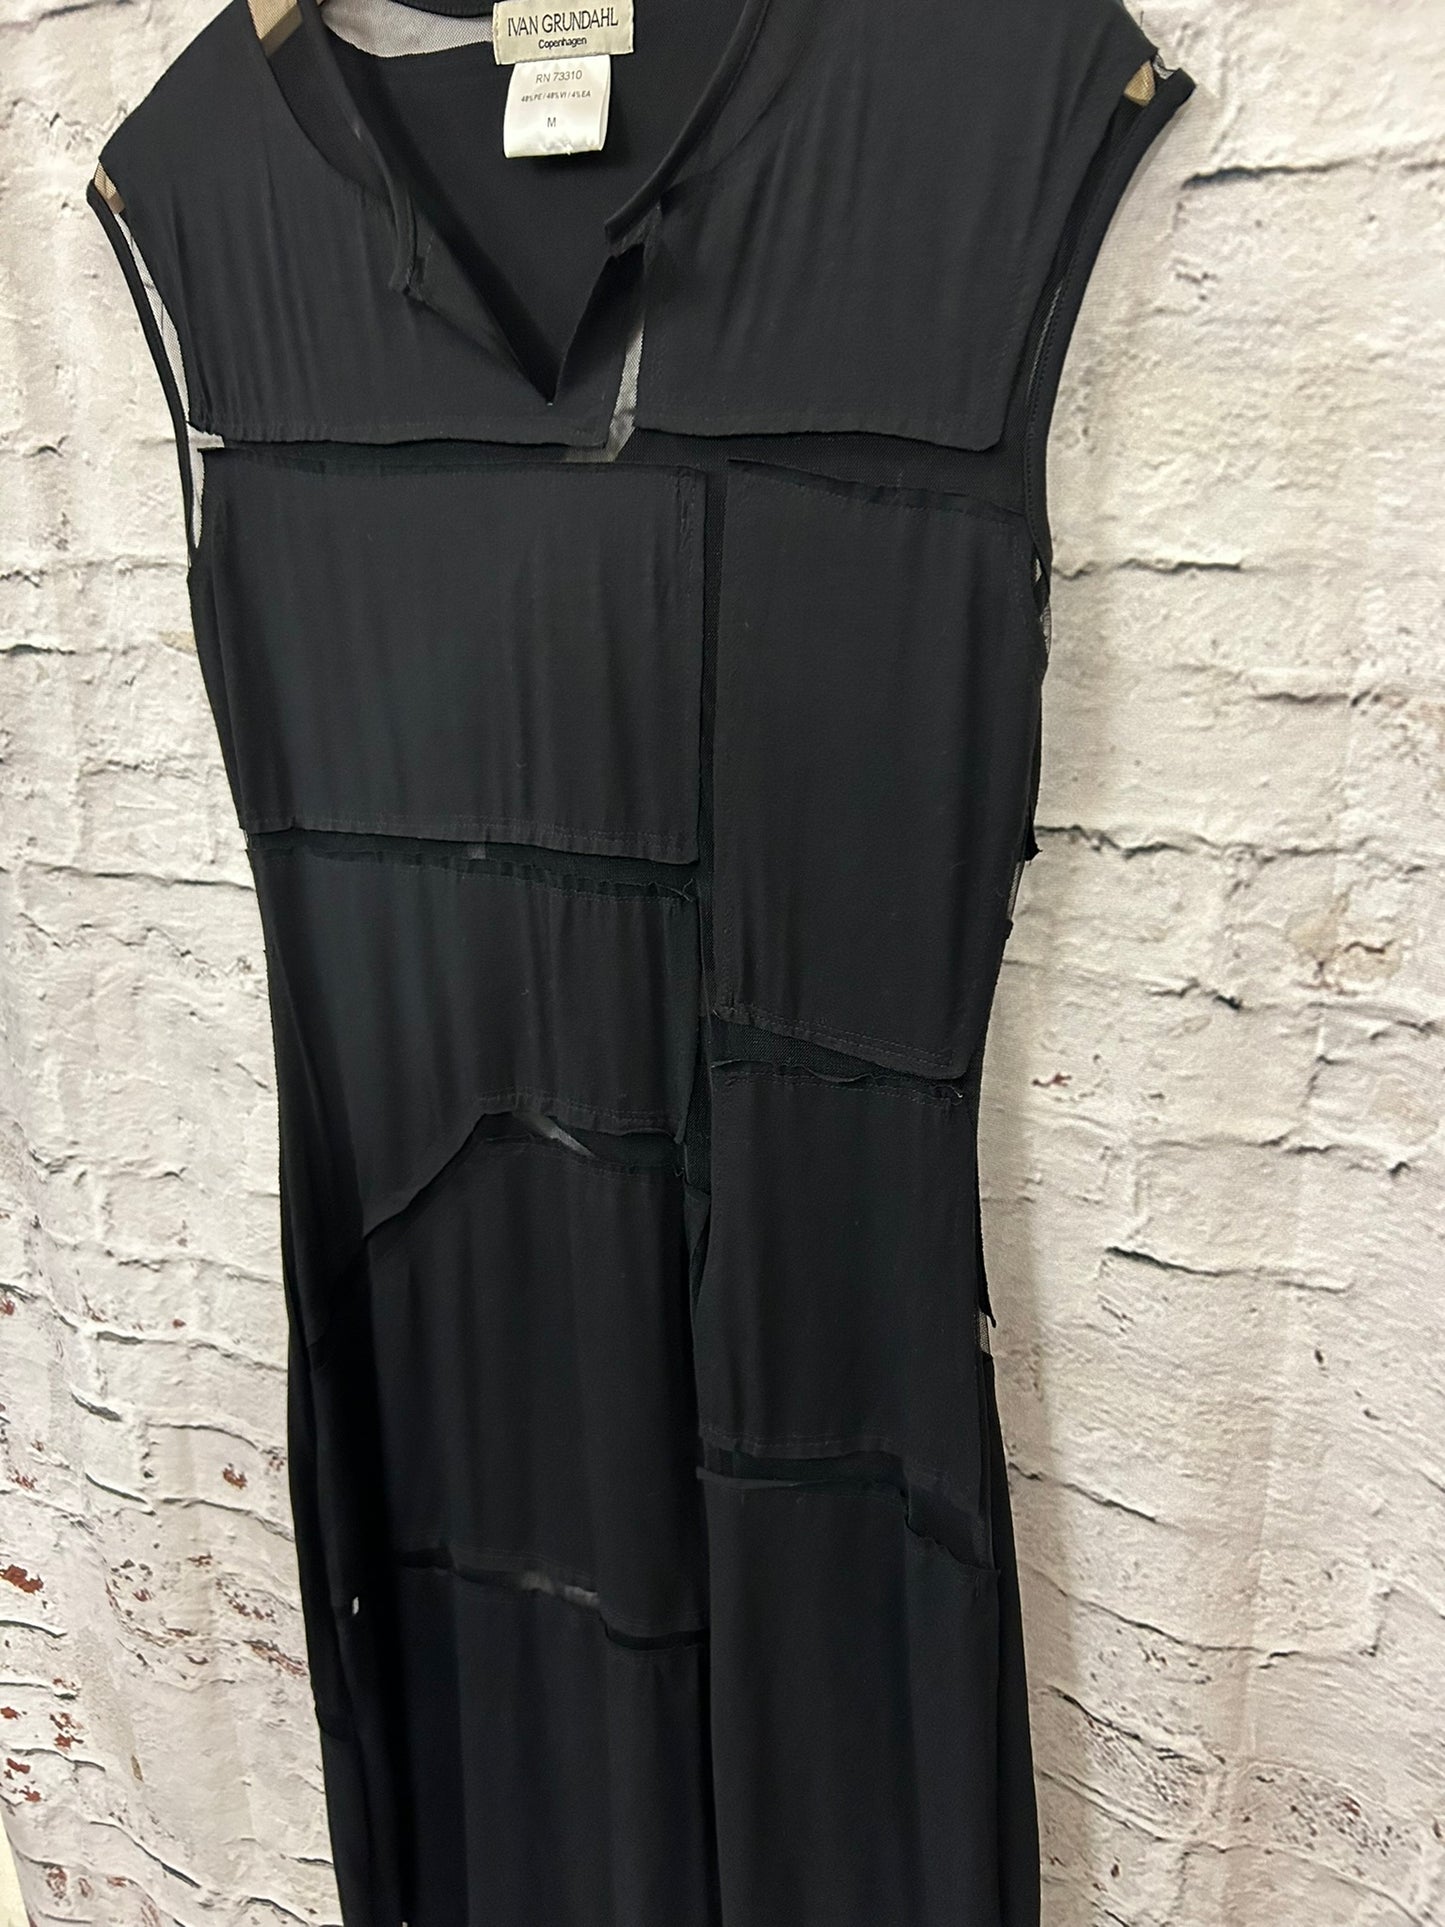 1990s Style Designer Black Cut-Out Mesh Dress Size 10-12